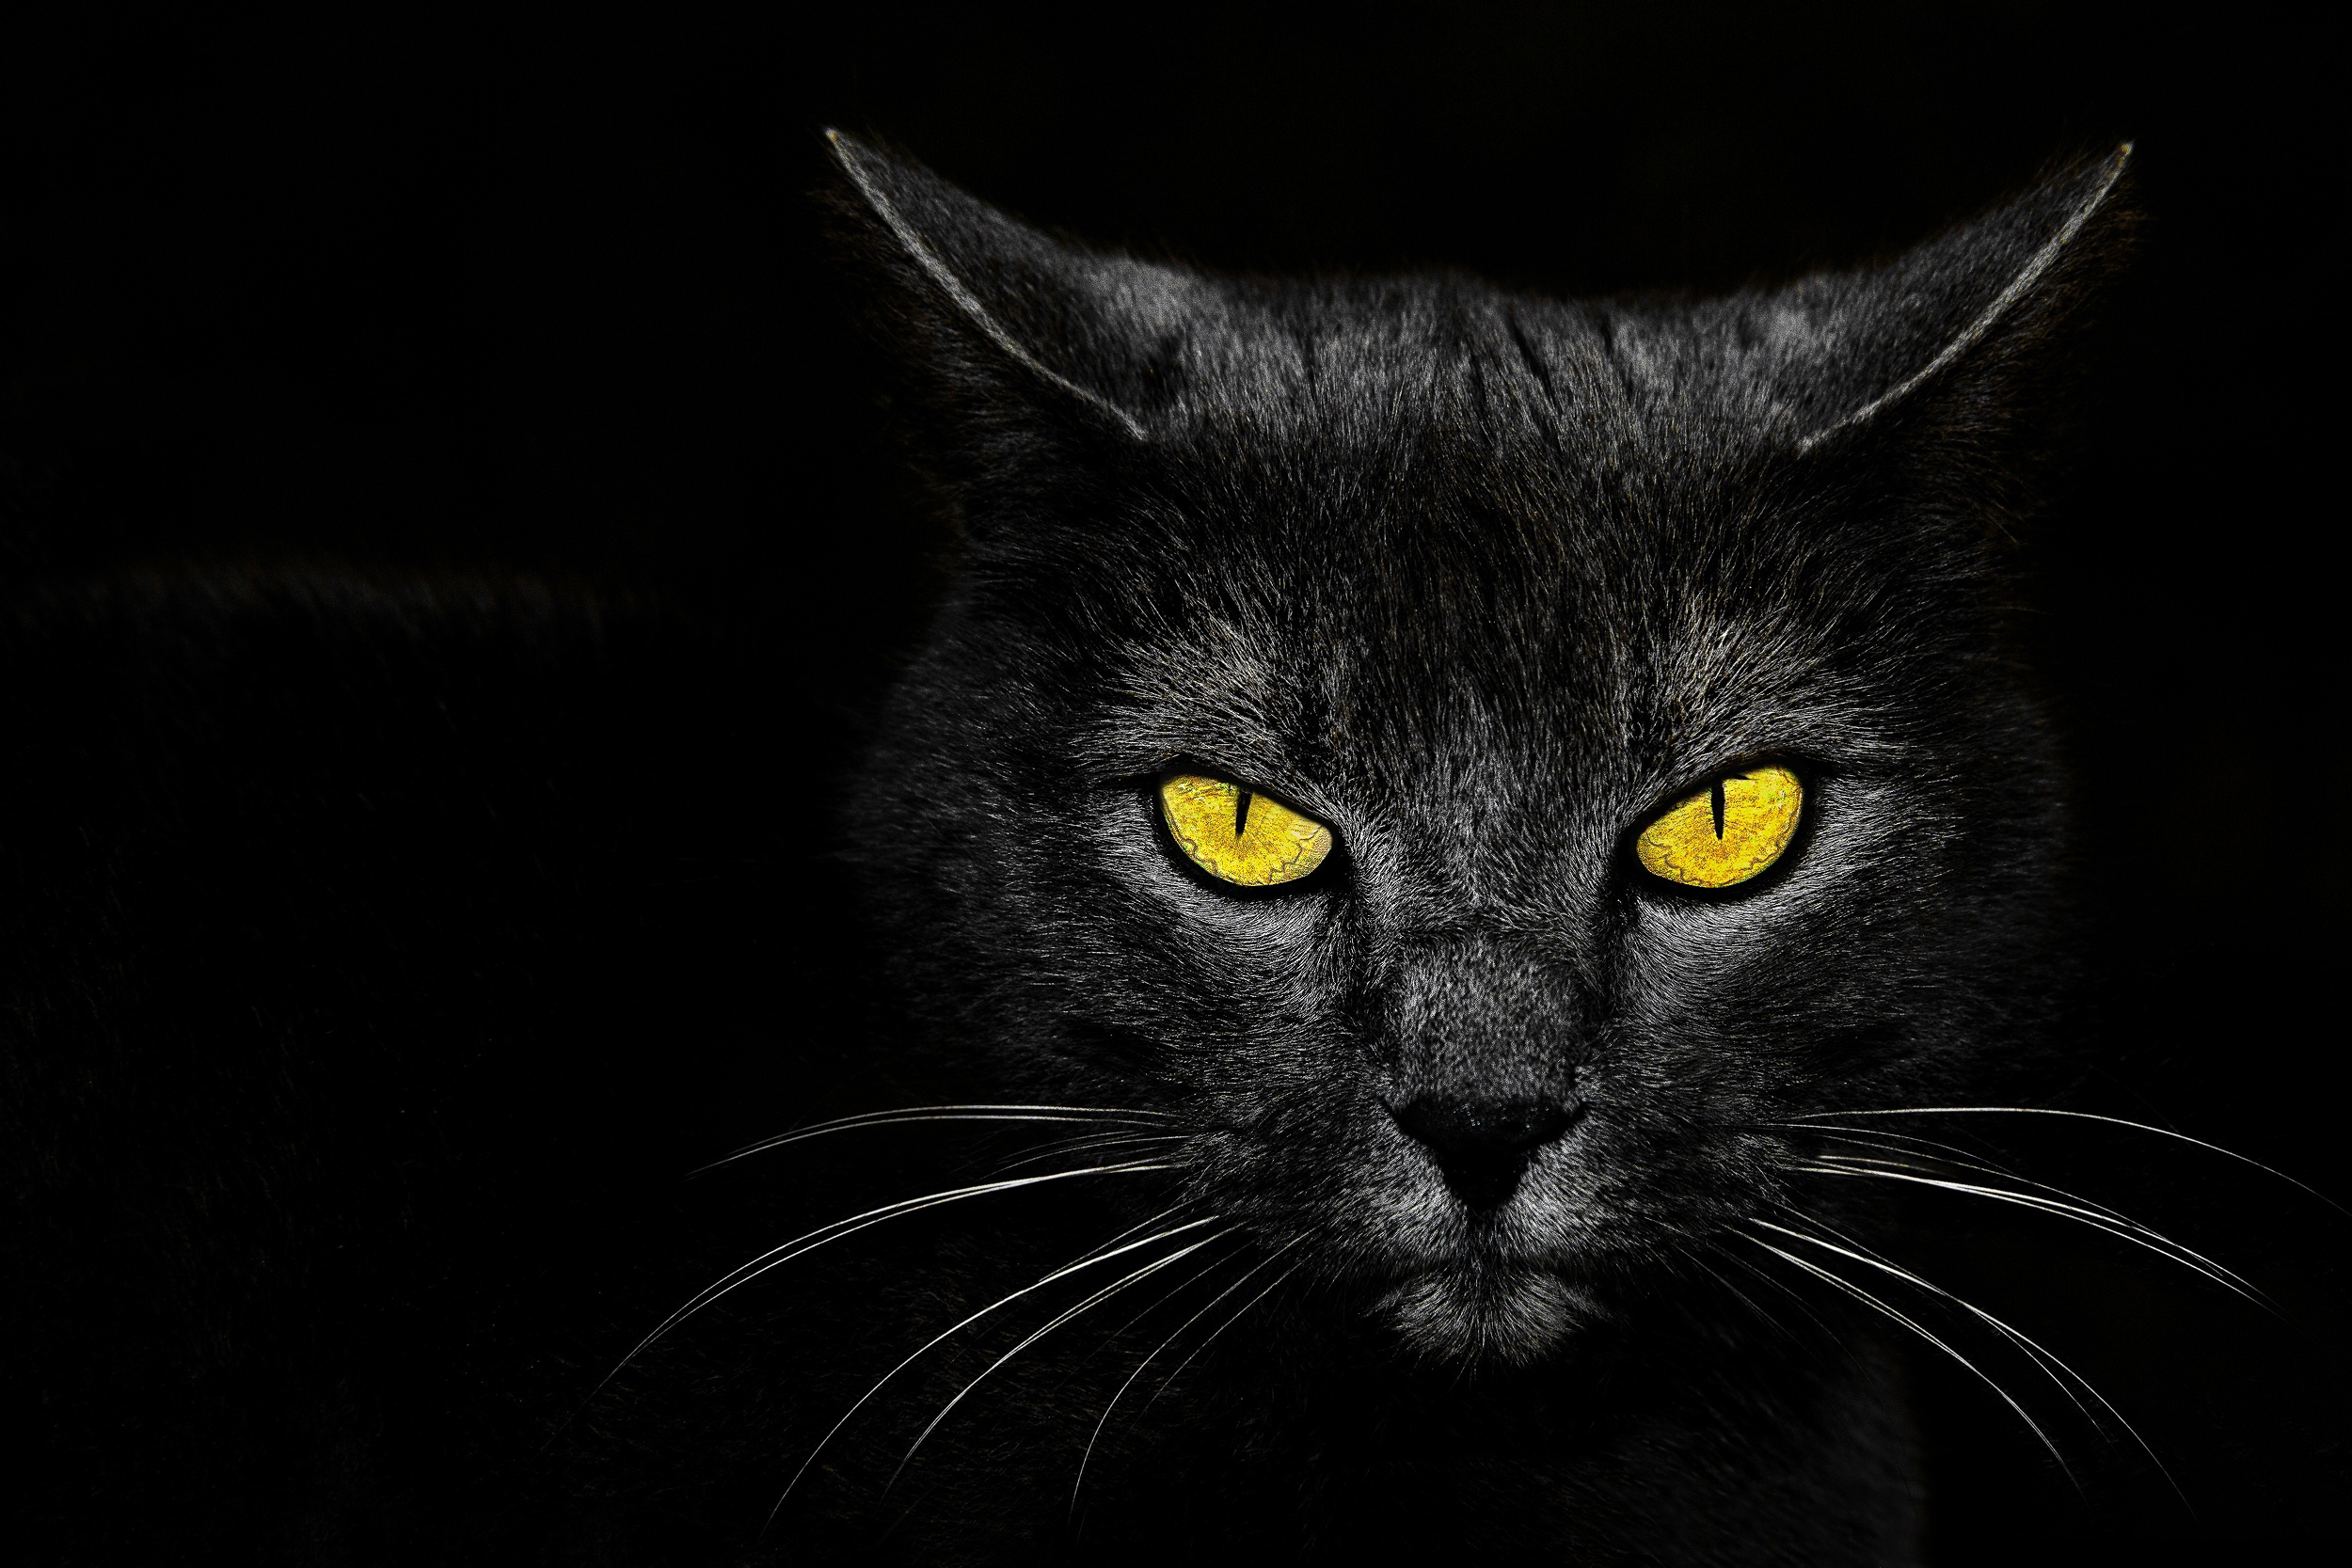  Kill Wallpaper black cat eyes background HD Wallpapers Photo 2500x1667